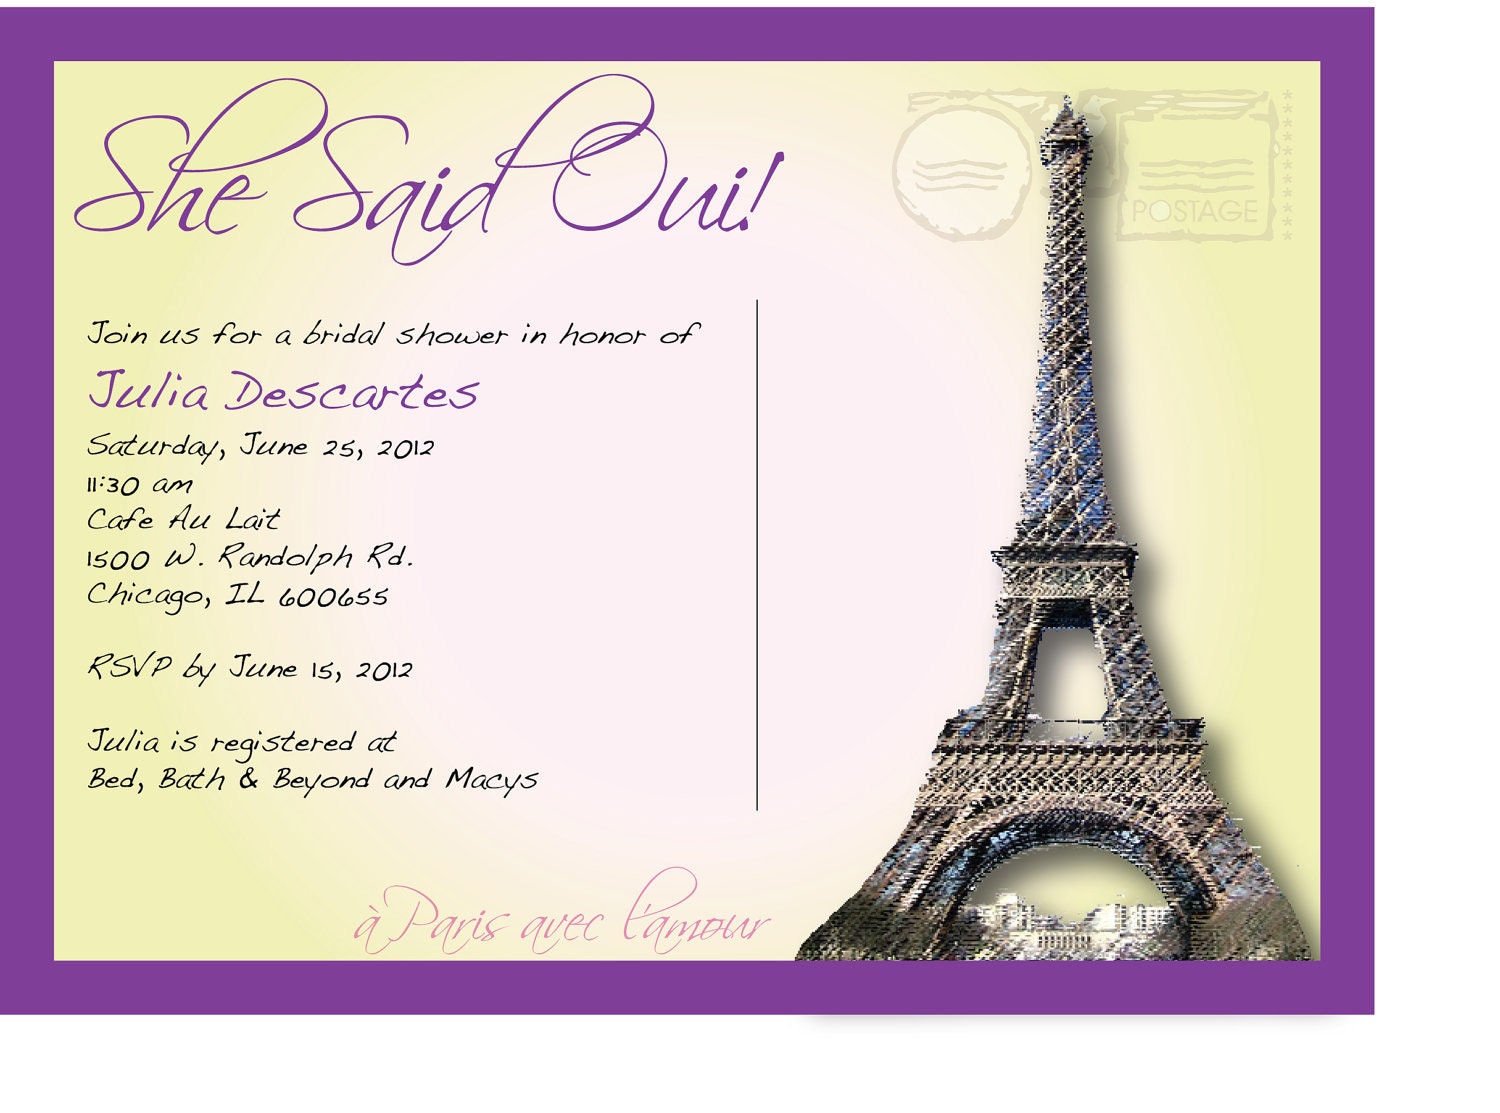 She Said Oui: French Themed Wedding Shower Invitation